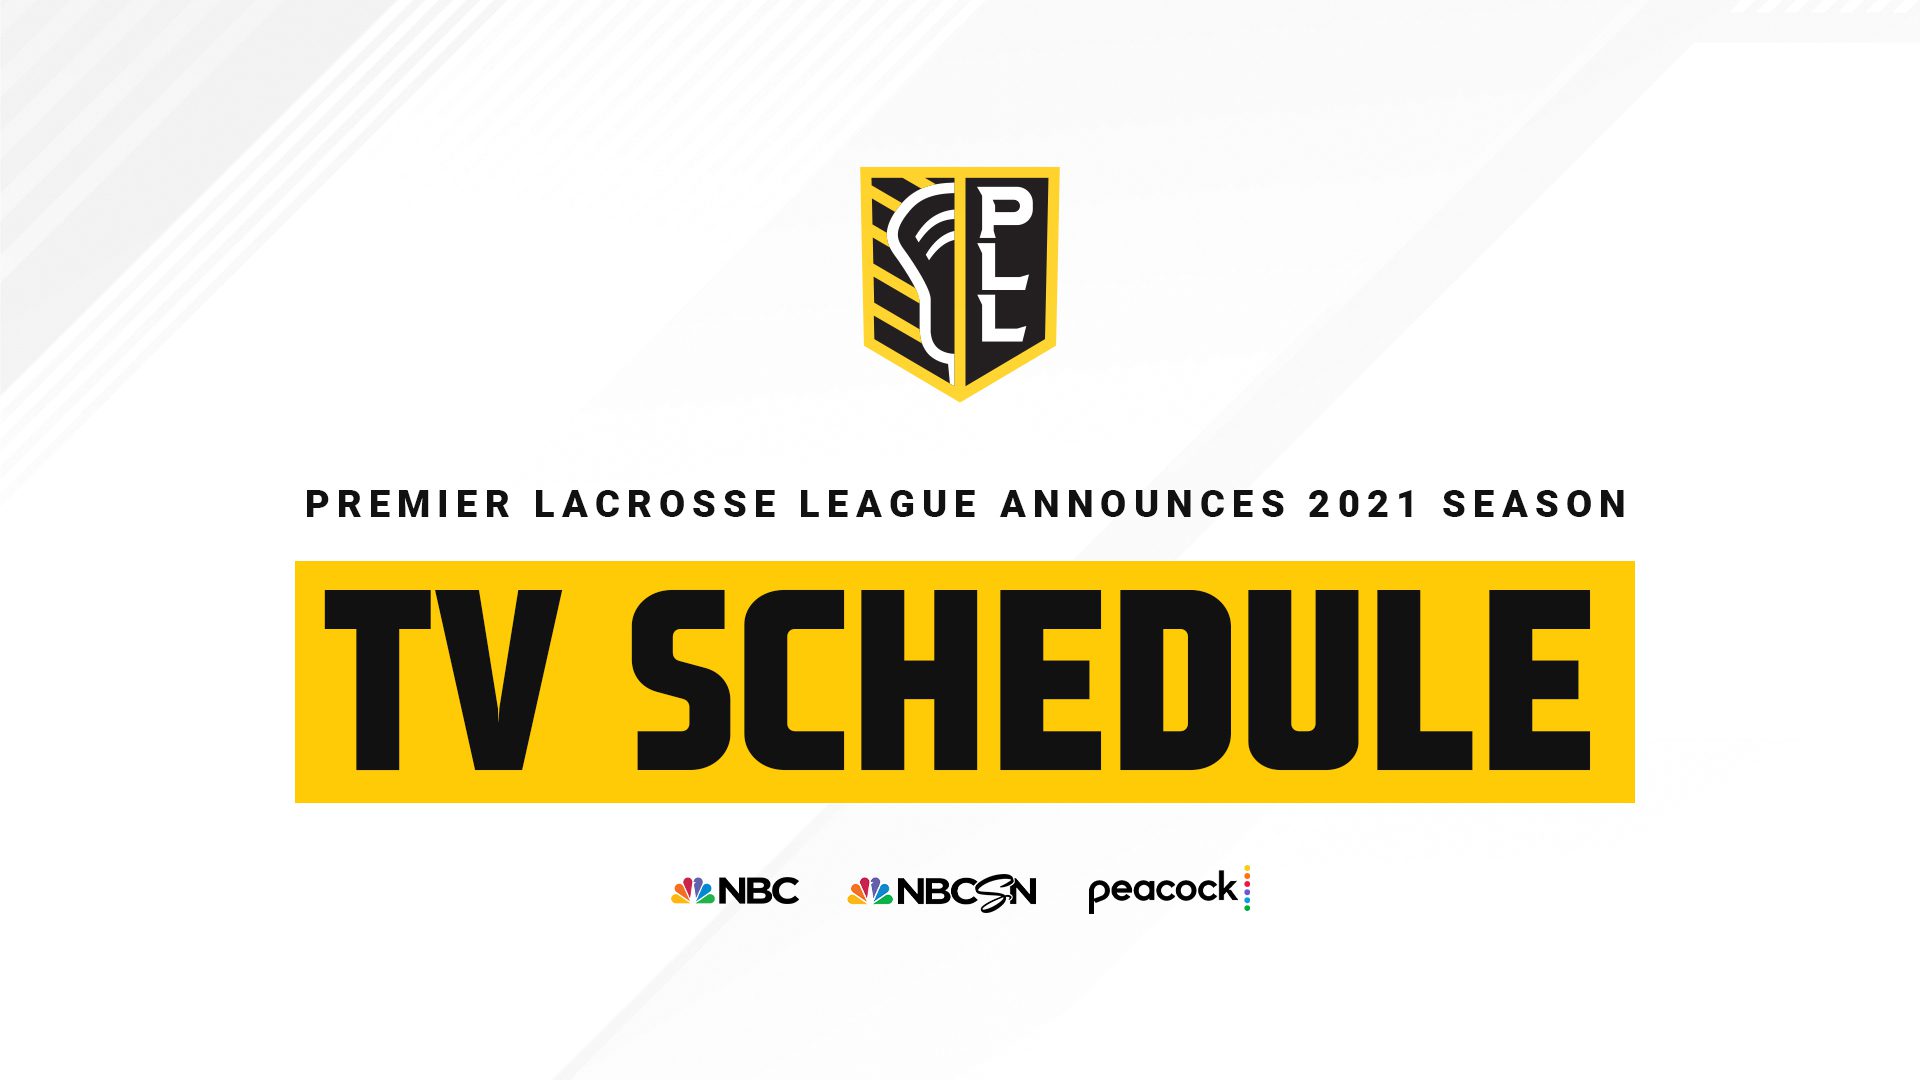 NBC Sports And Peacock Announce 2021 Premier Lacrosse League Media